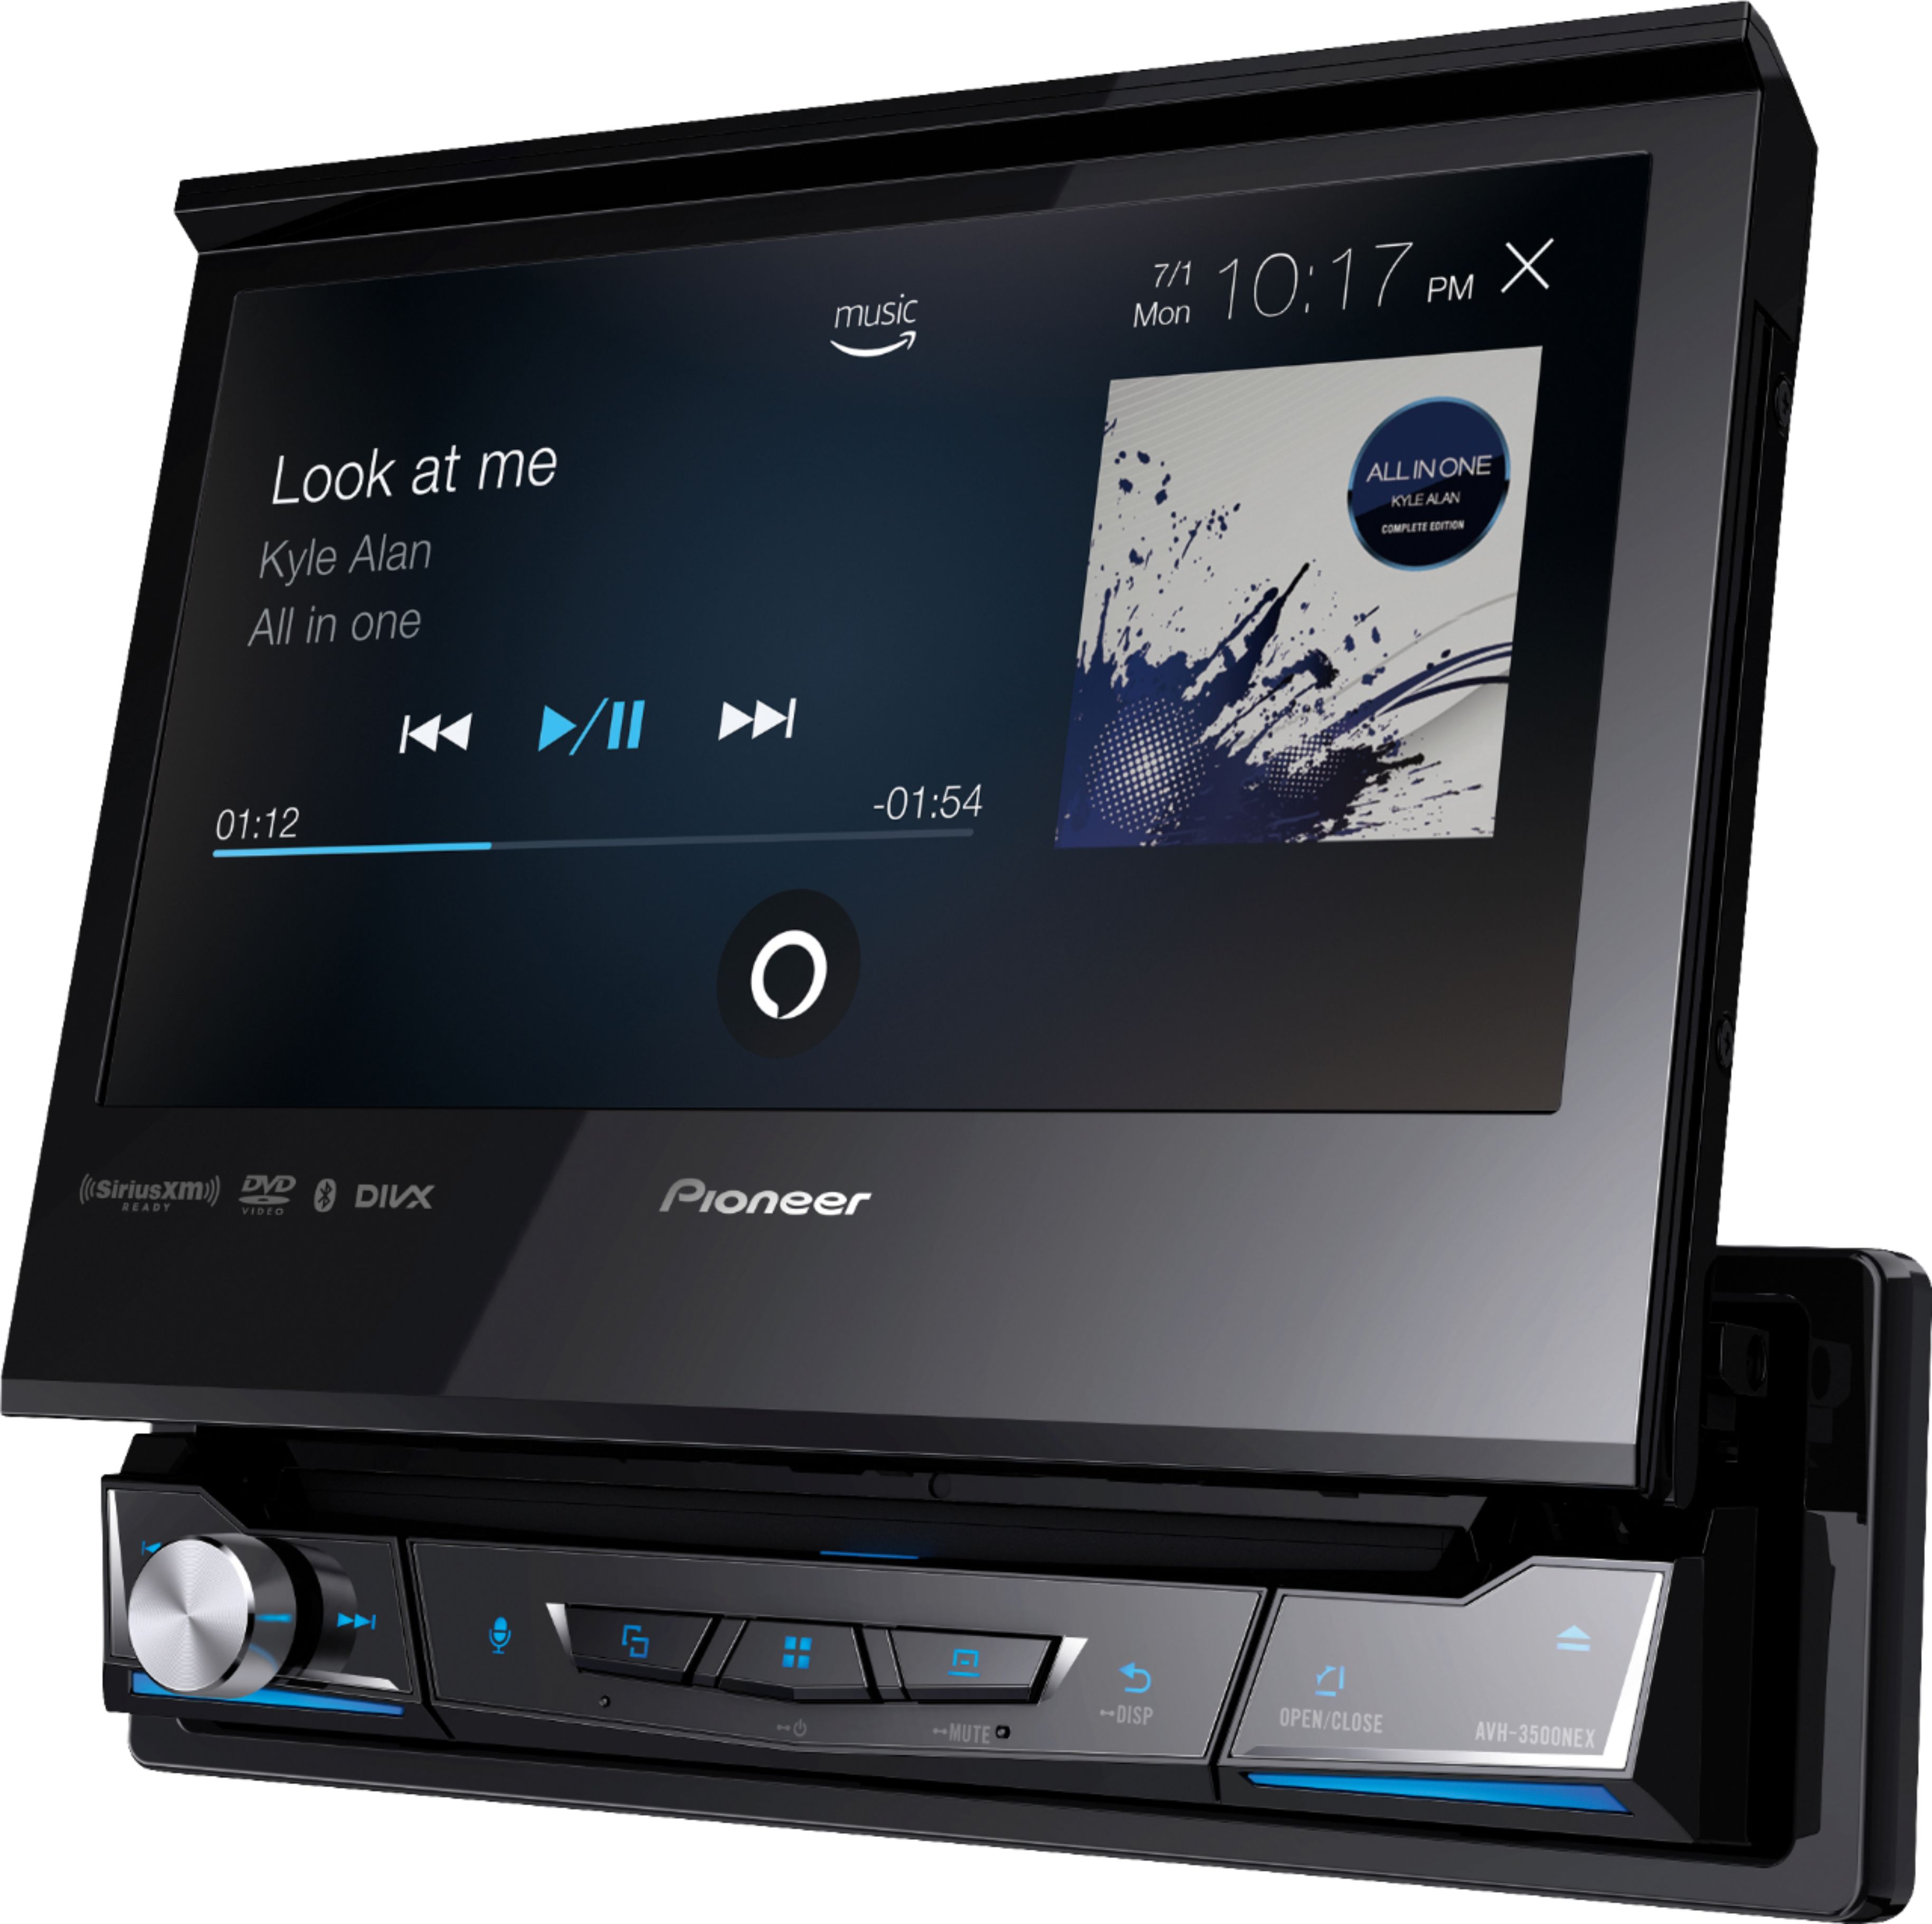 Autoradio Pioneer MVH-330DAB 1DIN Bluetooth MP3 USB Compatibile con Android  4988028478239